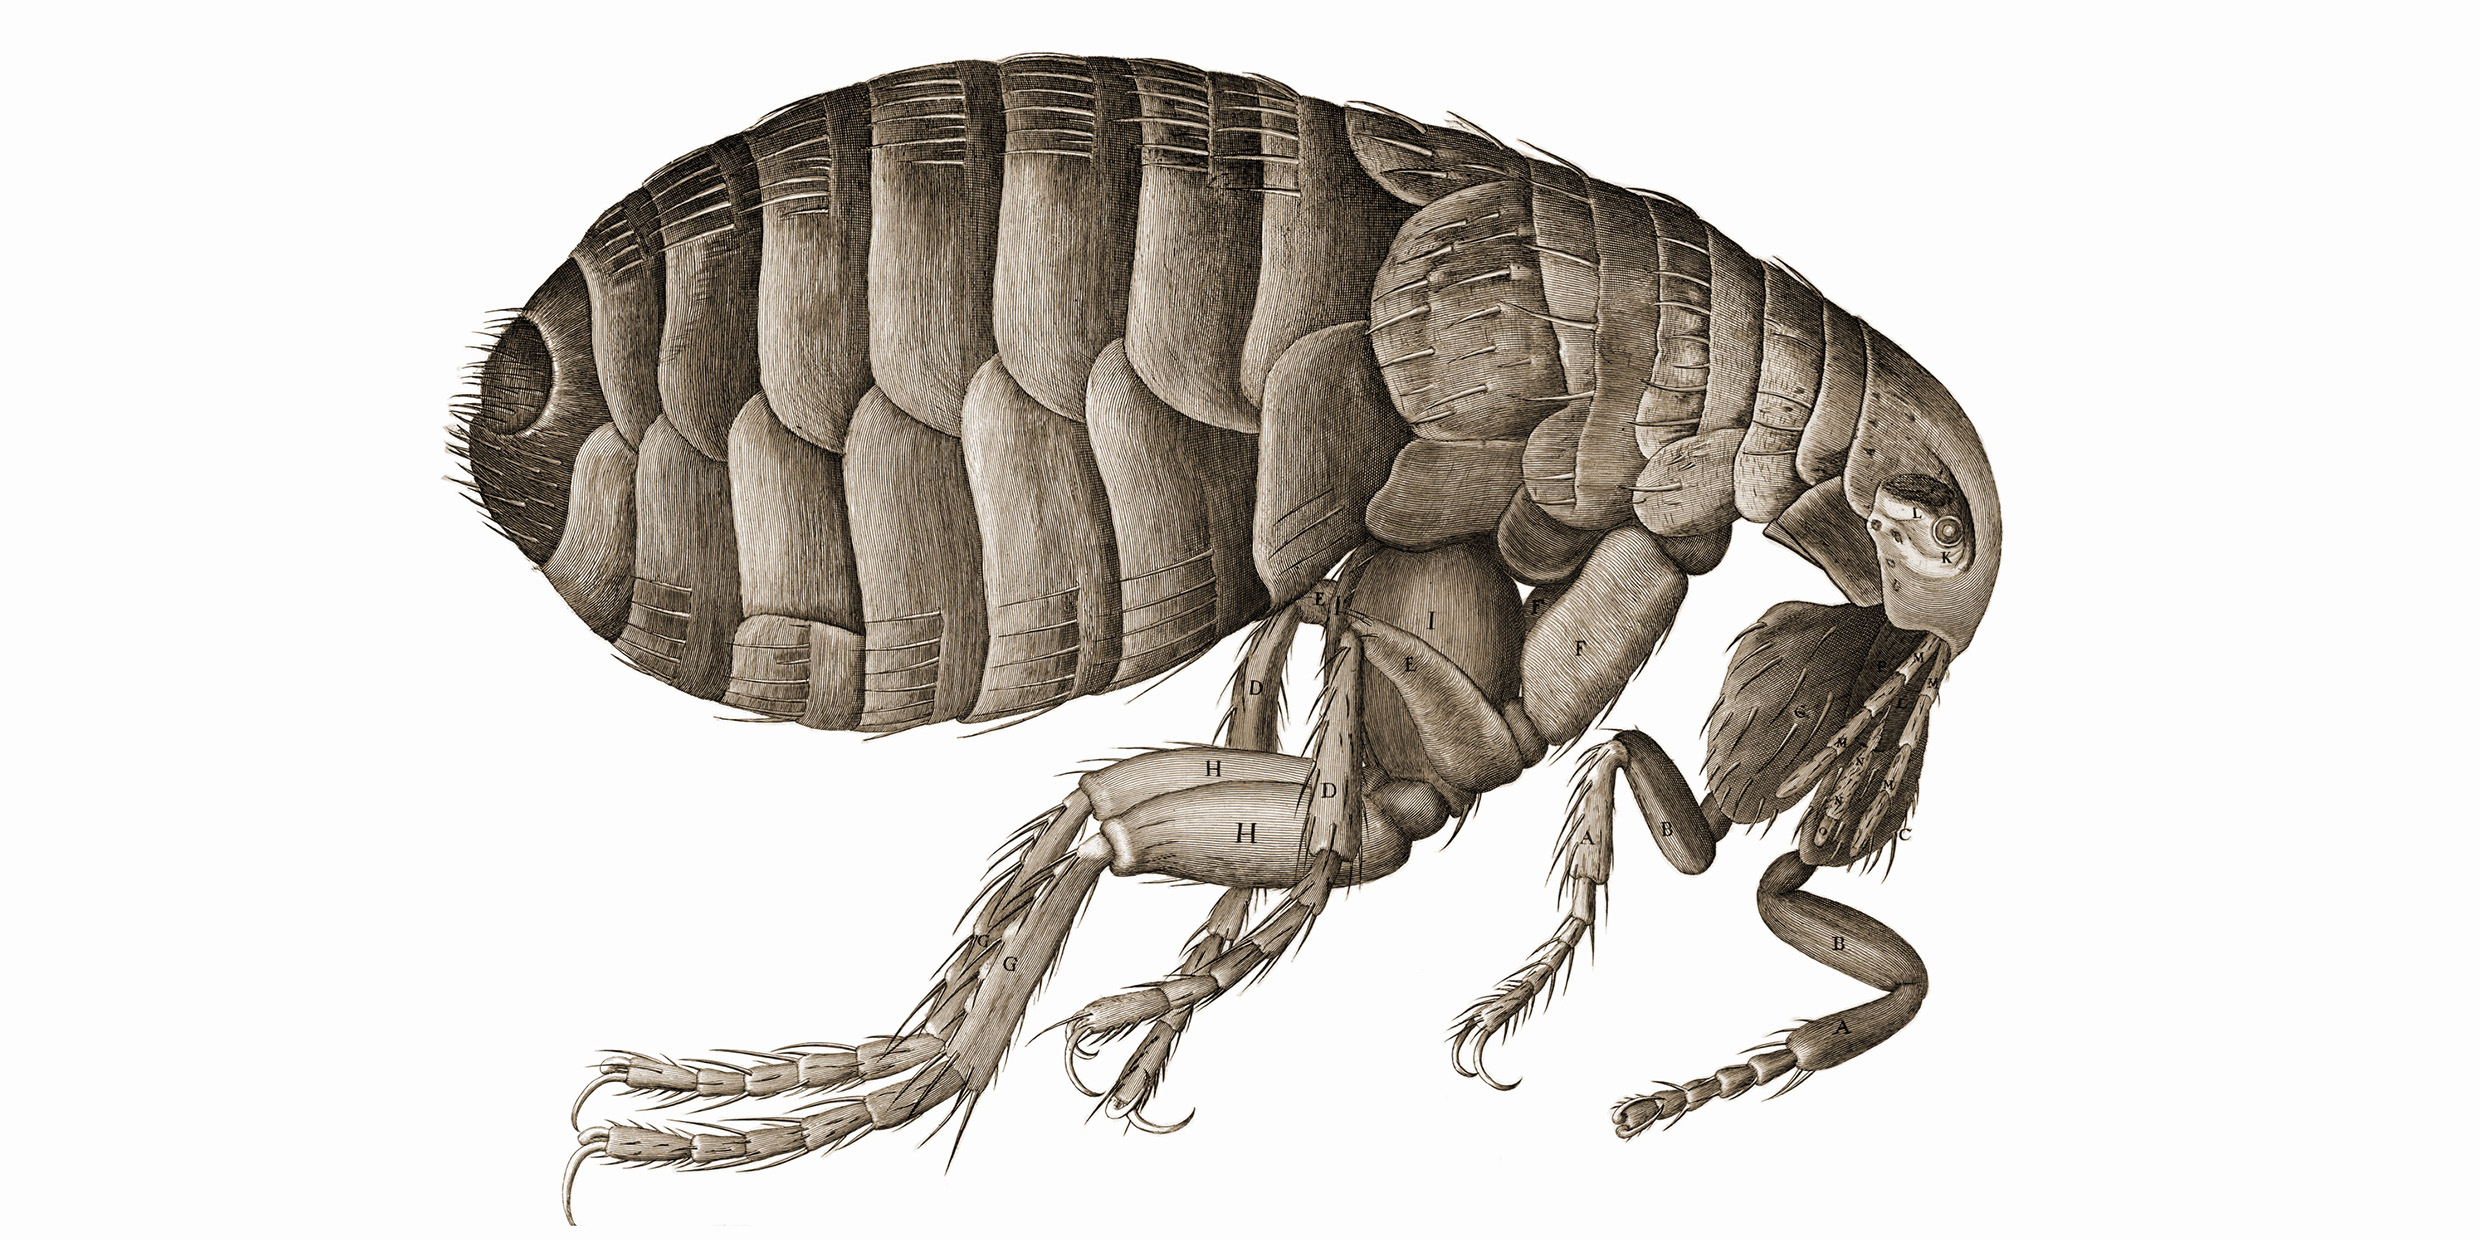 Scientific illustration of a flea